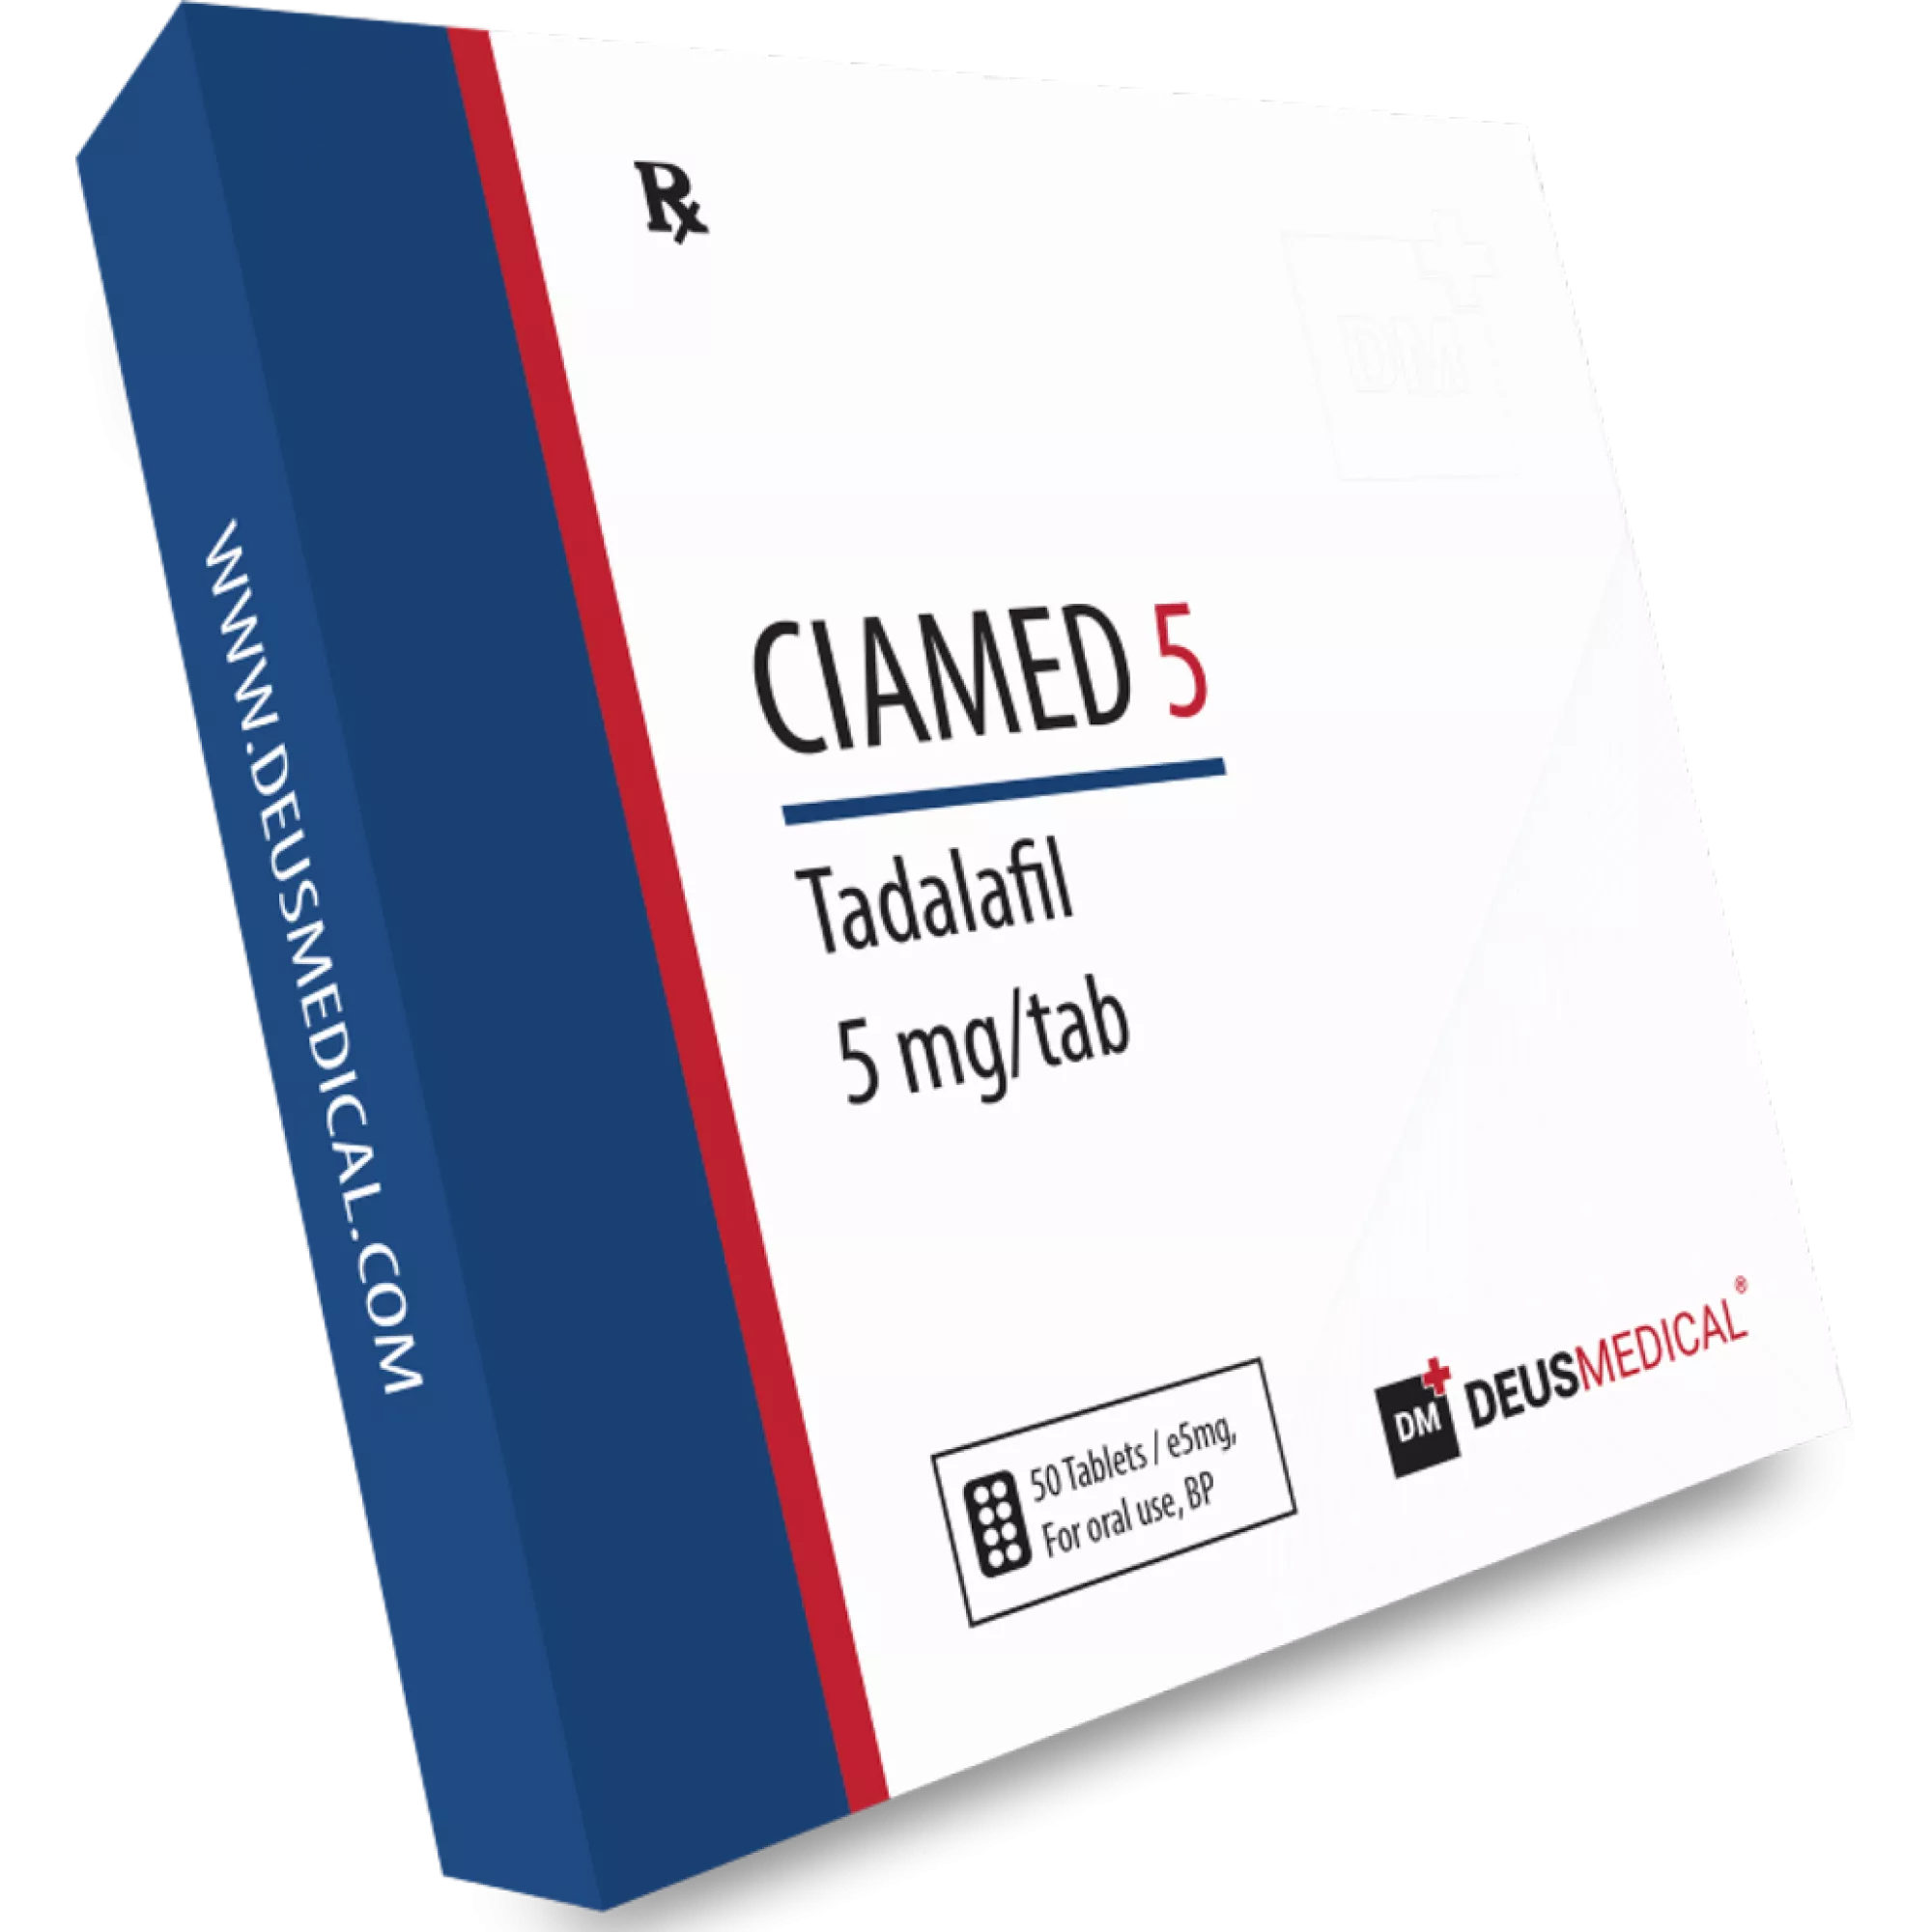 CIAMED 5 (Tadalafil) - Cialis, Deus Medical, Buy Steroids Online - www.deuspower.shop